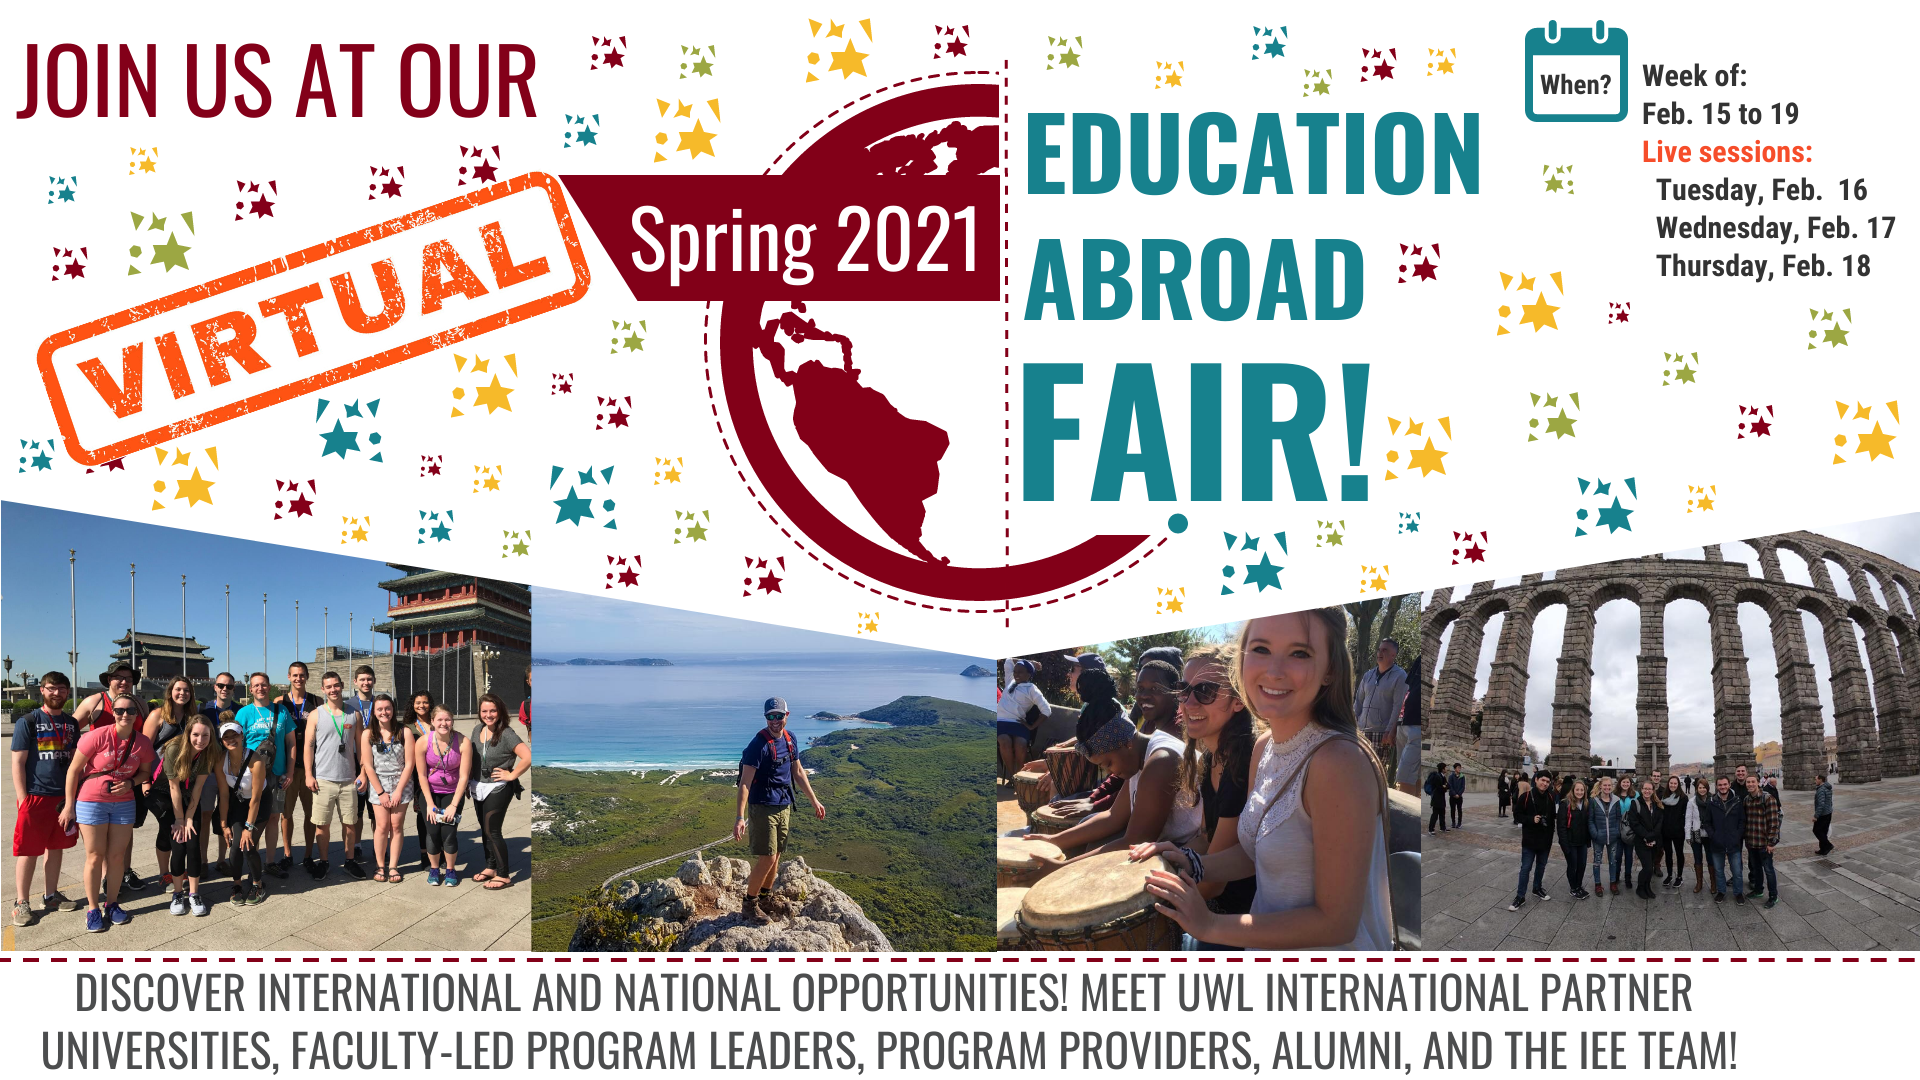 Education Abroad Fair-Spring